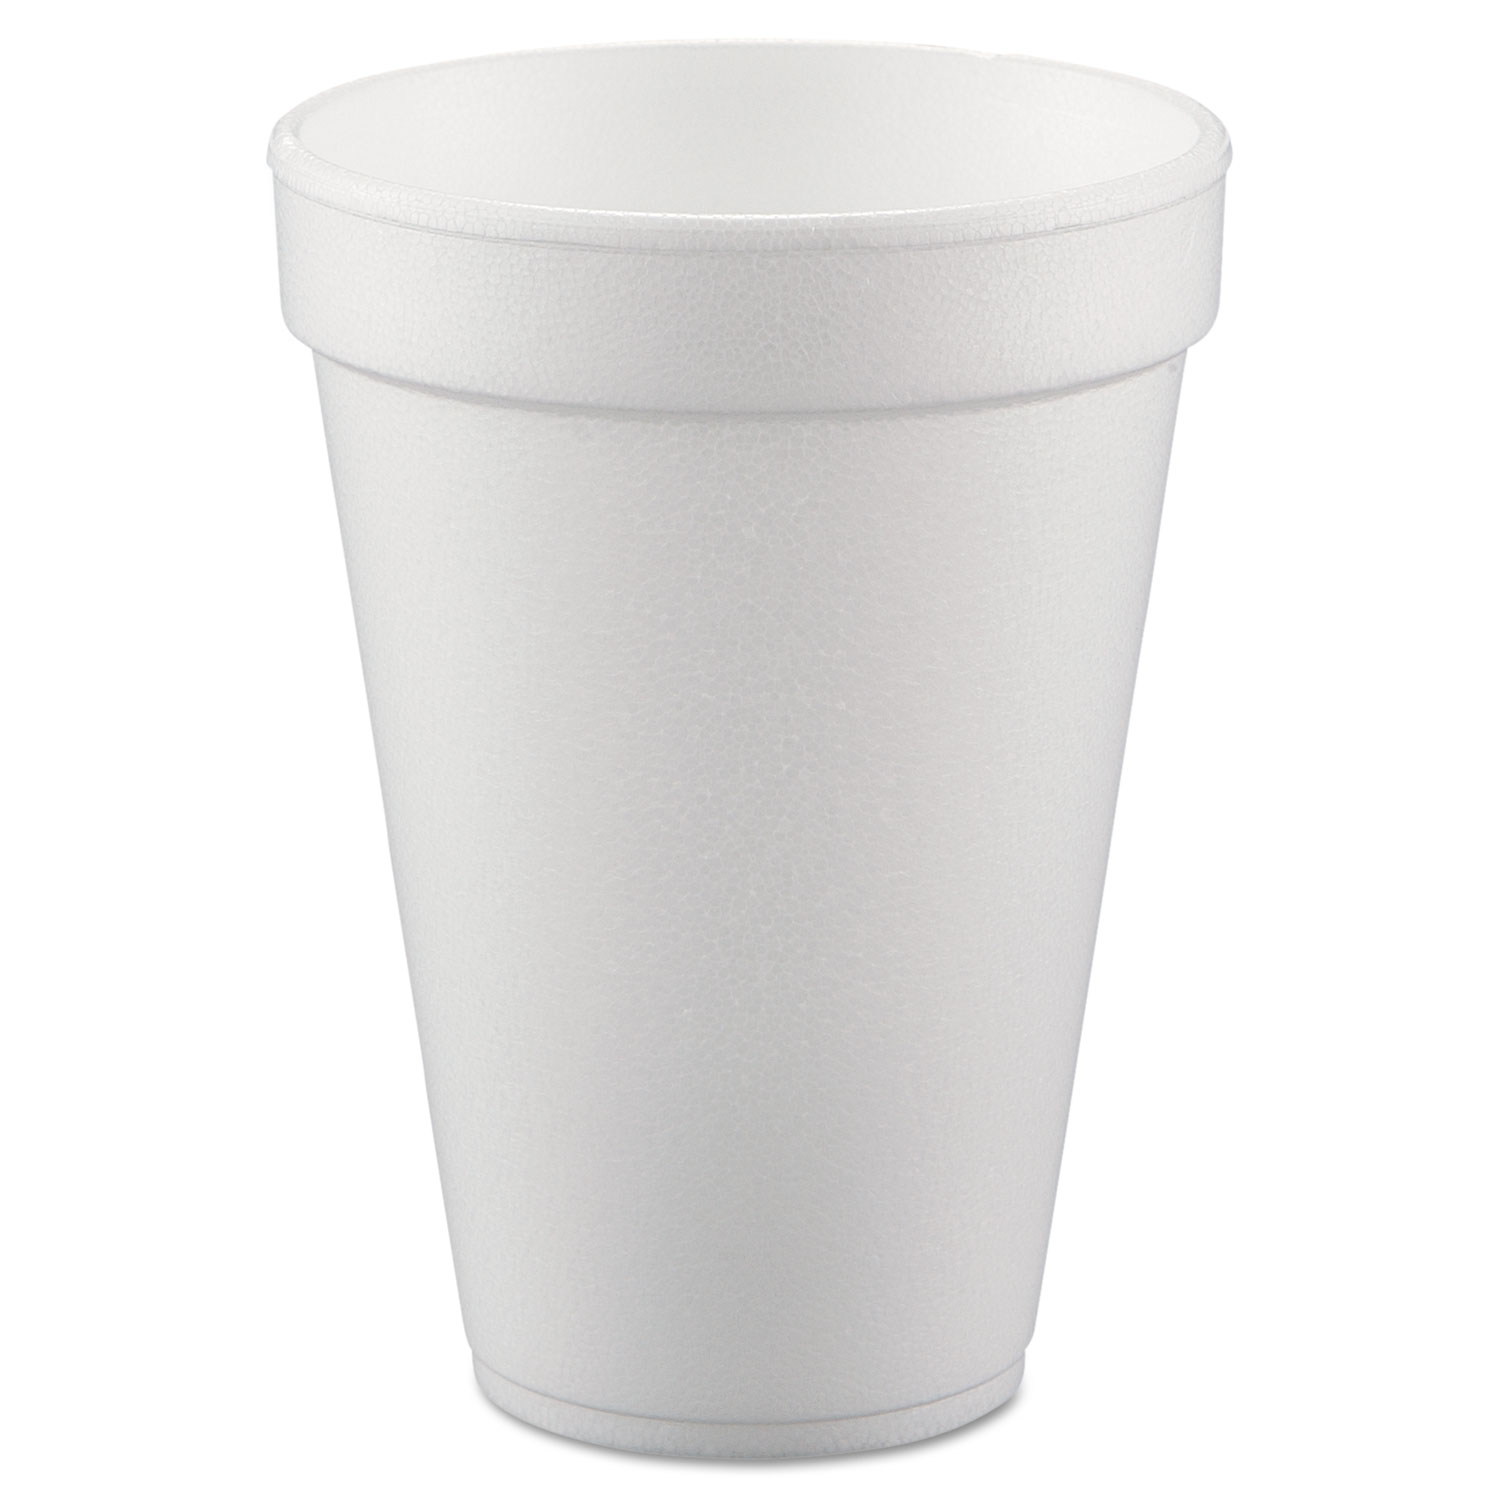  Dart 10FJ8 Conex Hot/Cold Foam Drinking Cups, 10oz, White, 40/Bag, 25 Bags/Carton (DCC10FJ8) 